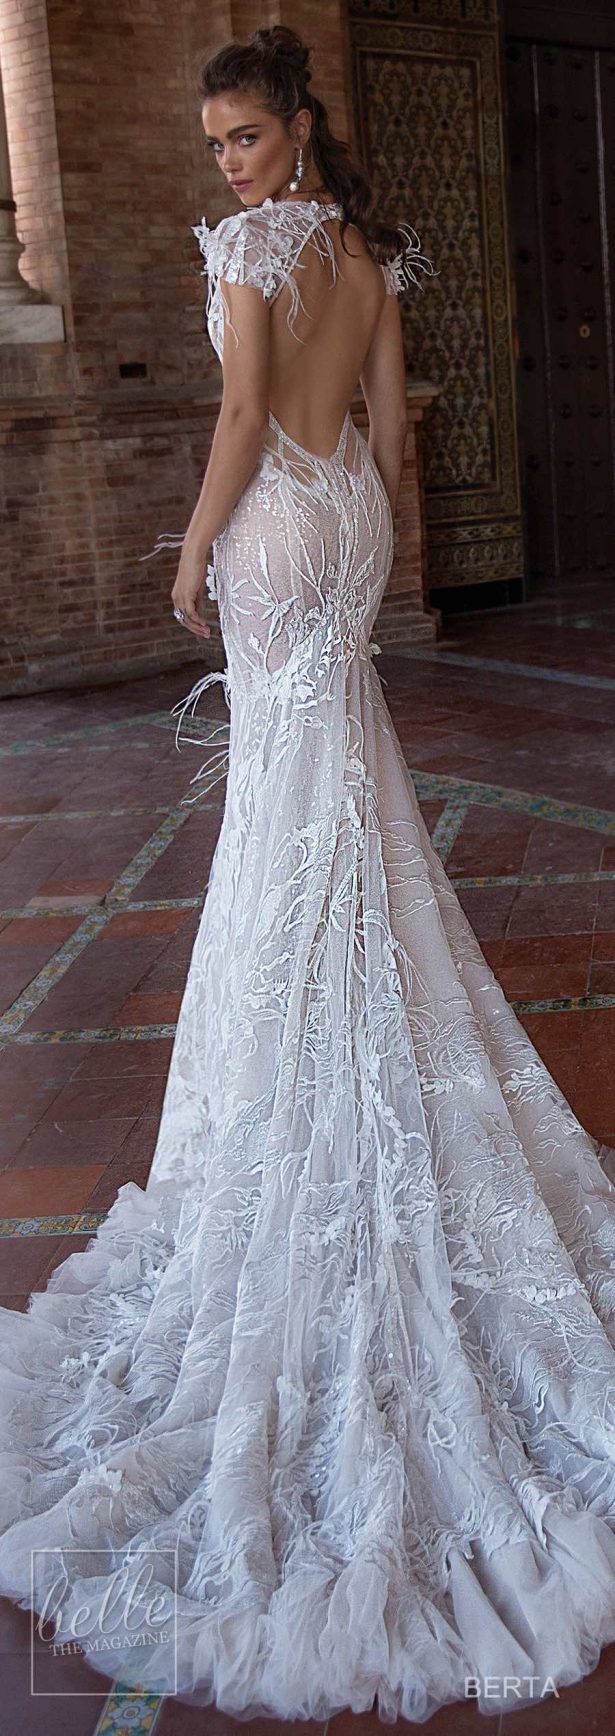 Berta Fall 2018 Seville Wedding Dress Collection - Belle The Magazine